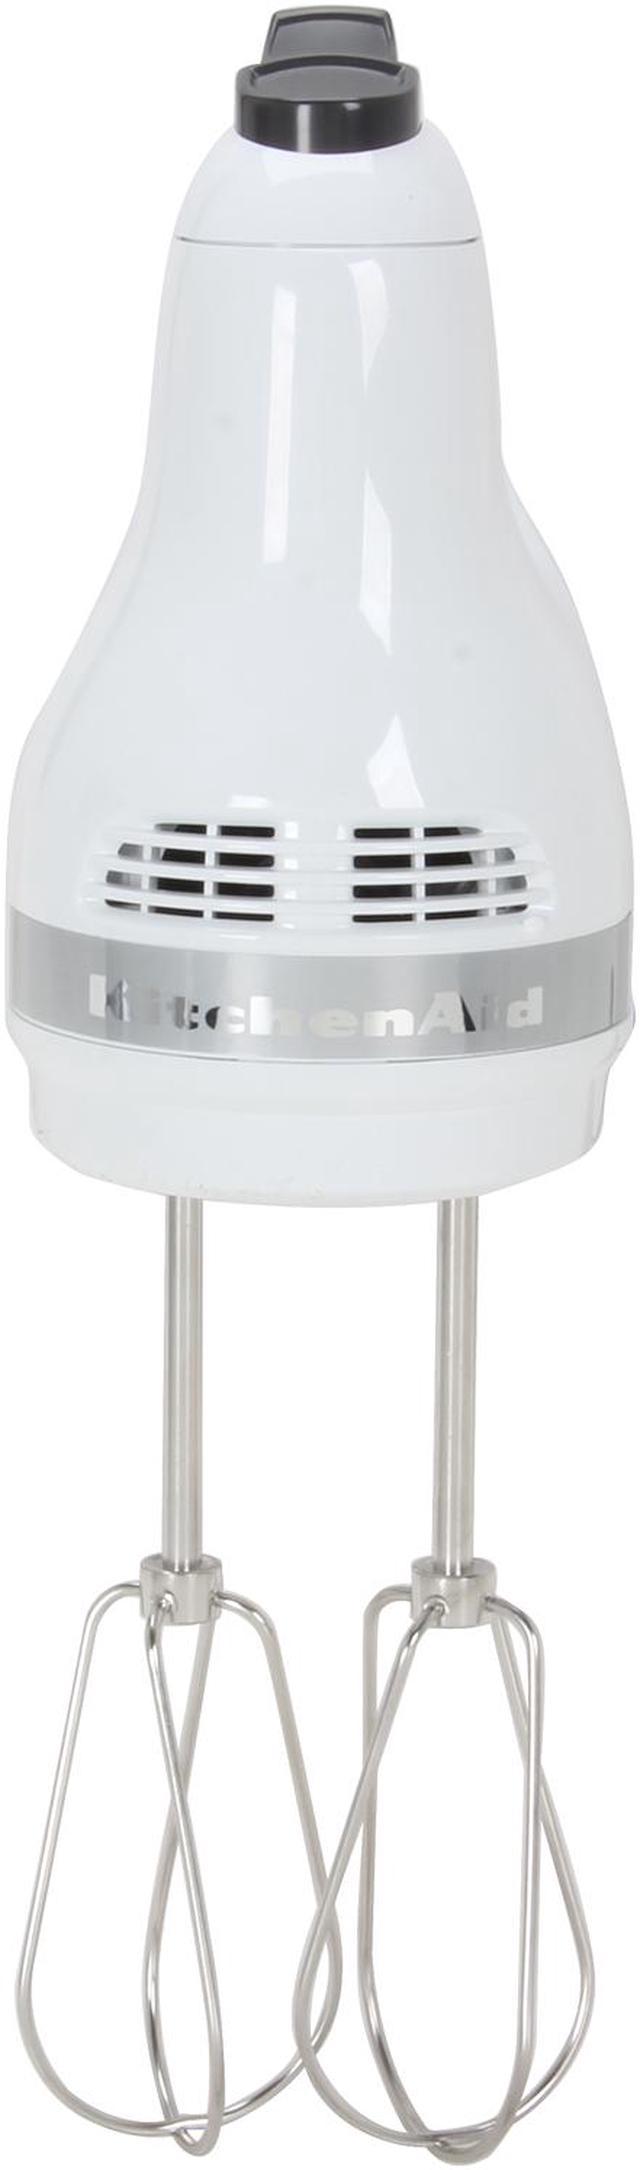 KitchenAid Ultra Power Hand Mixer KHM5DH Handheld Mixer Electric 5 Speed  White